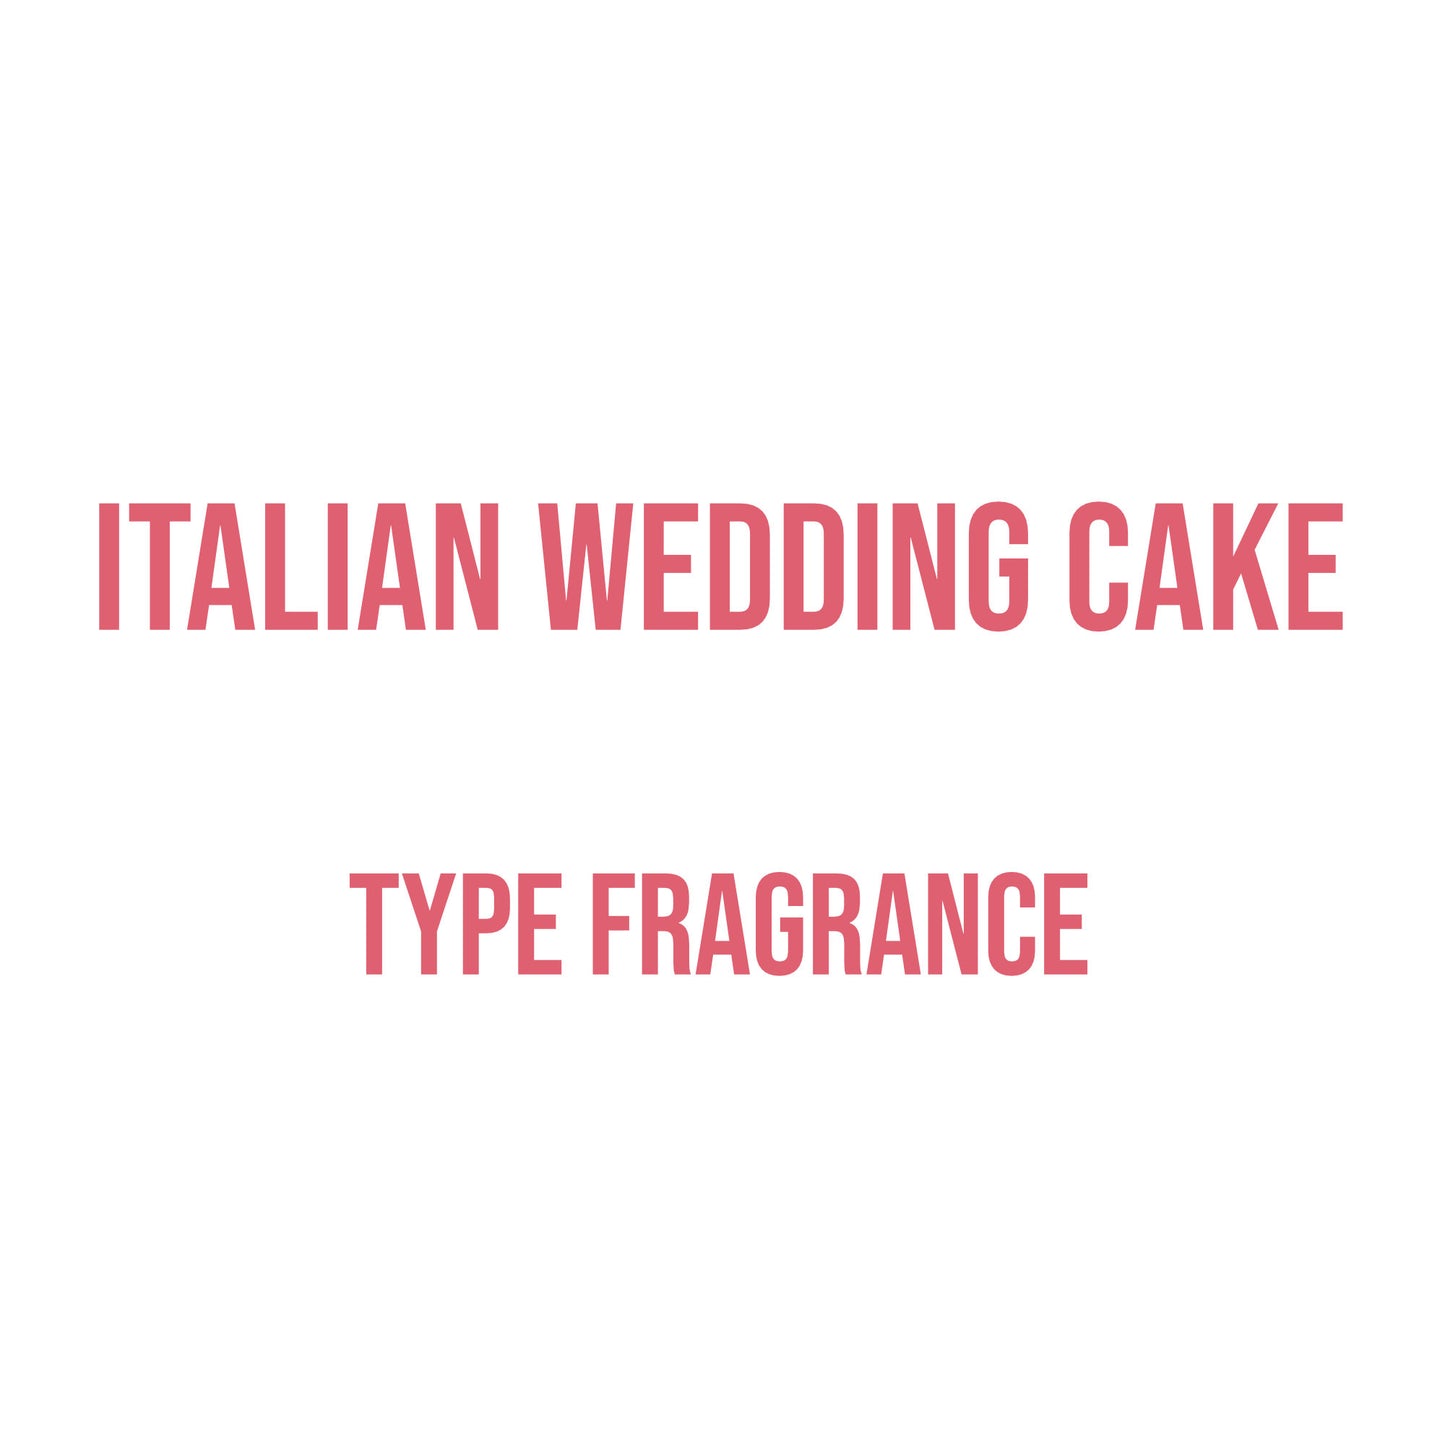 Italian Wedding Cake Type Fragrance